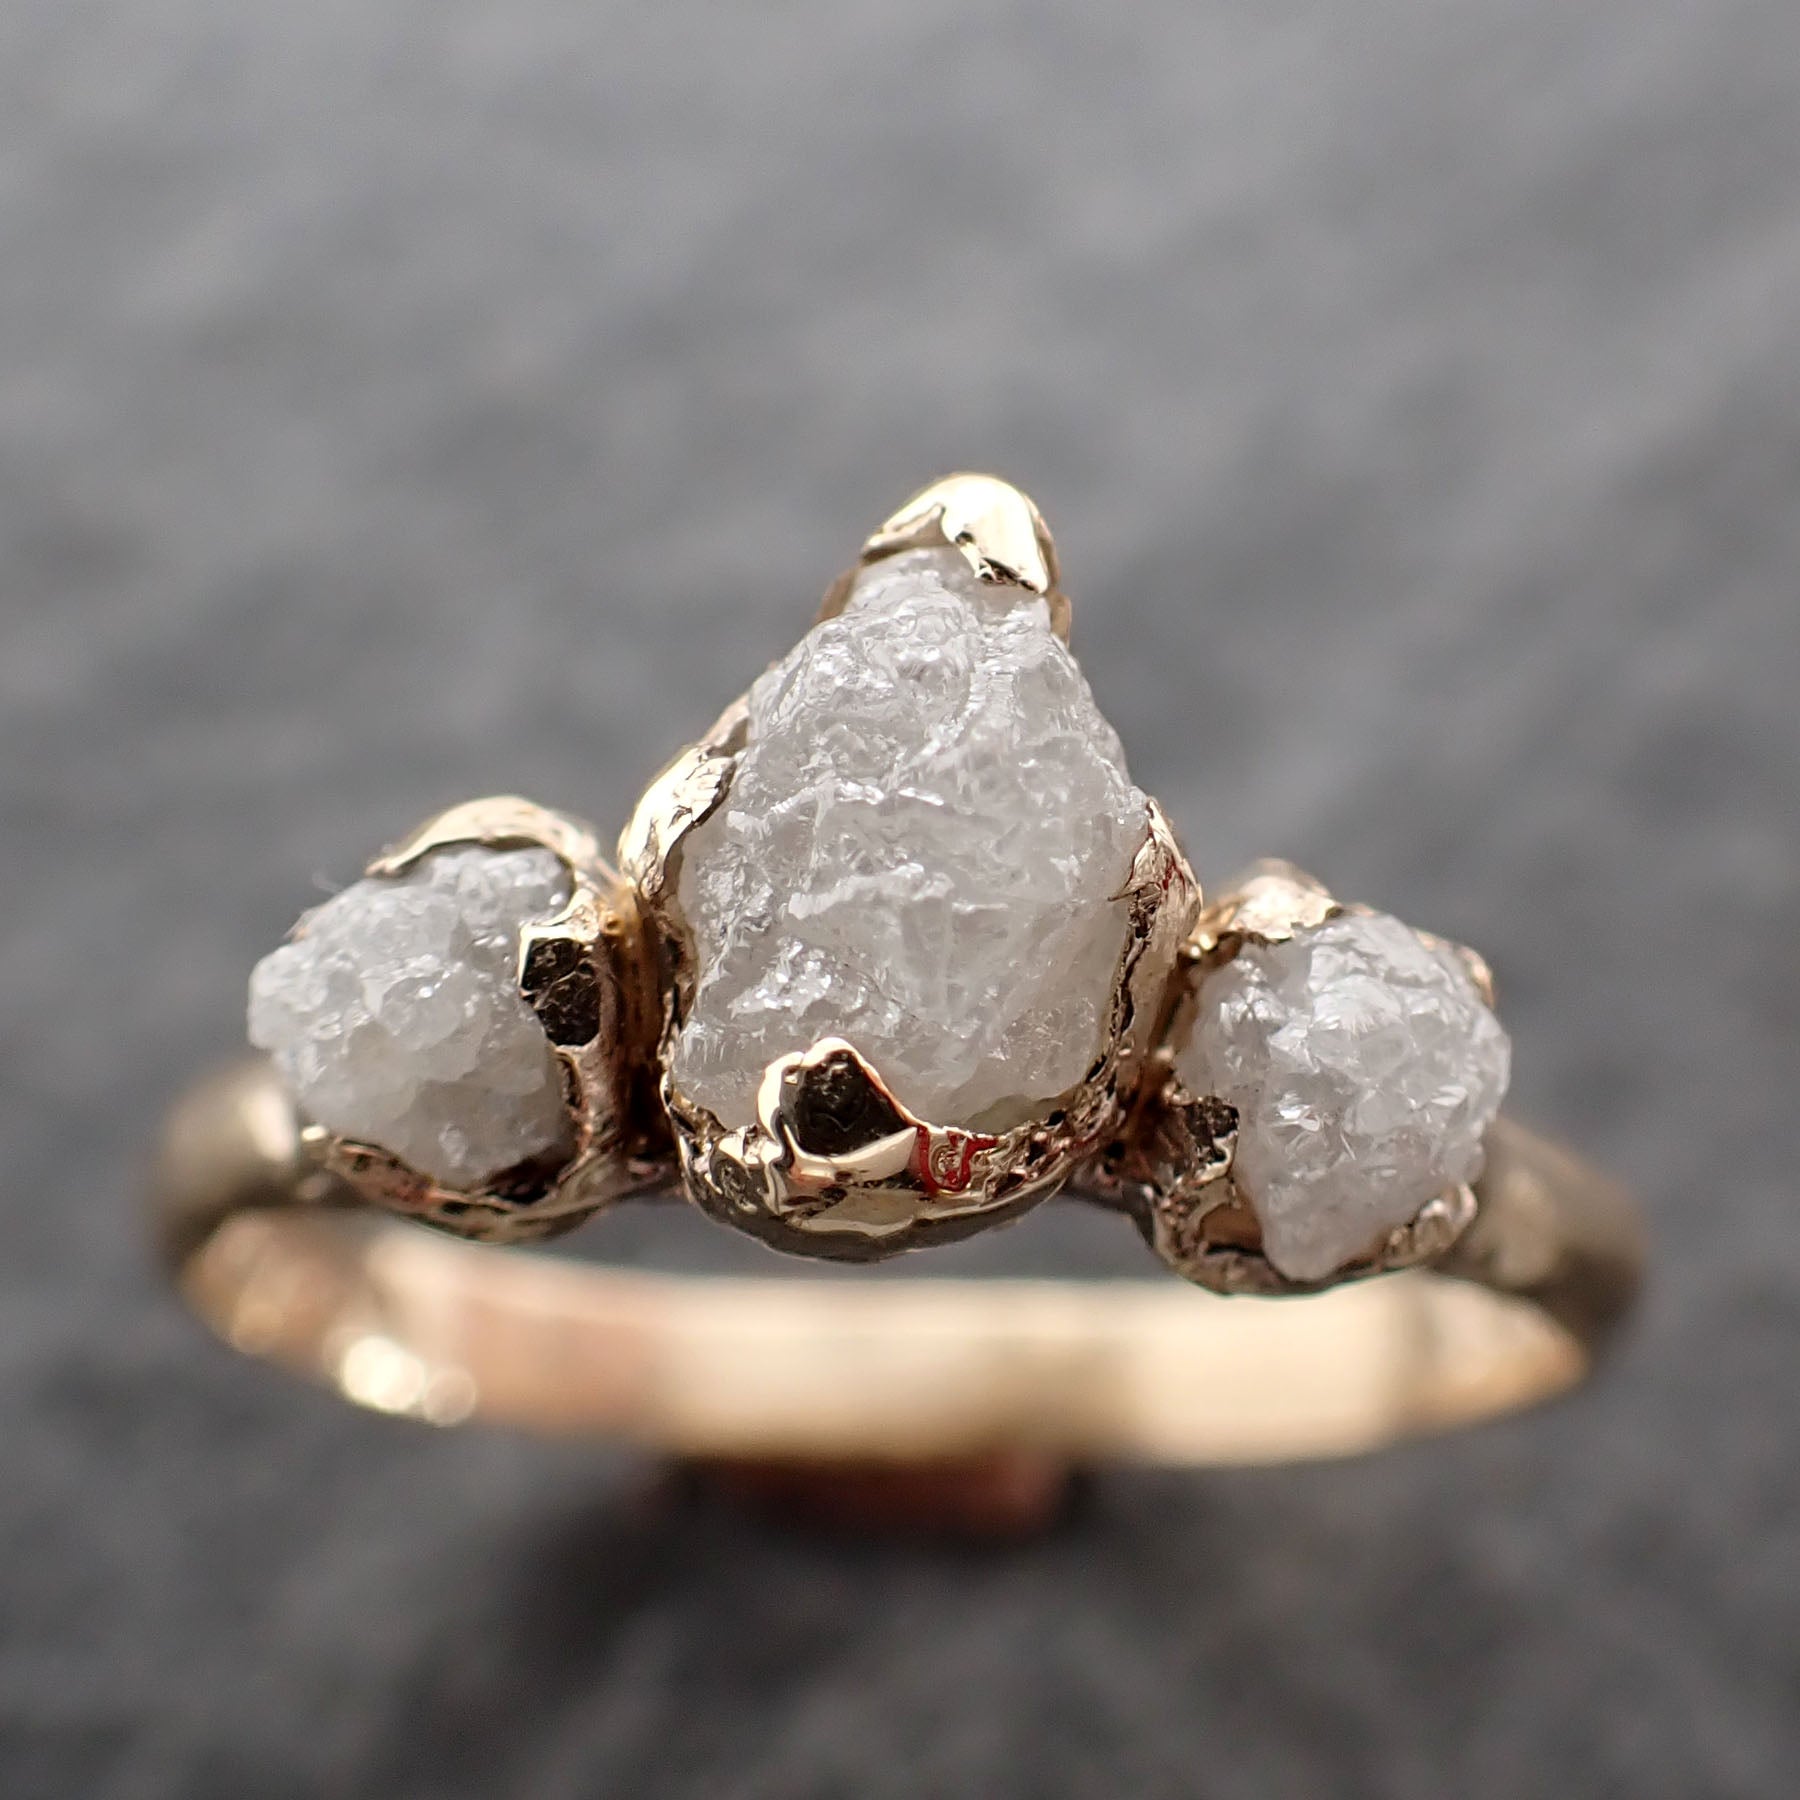 Raw Rough Diamond Engagement Stacking Multi stone Wedding anniversary 14k Gold Ring Rustic 2497